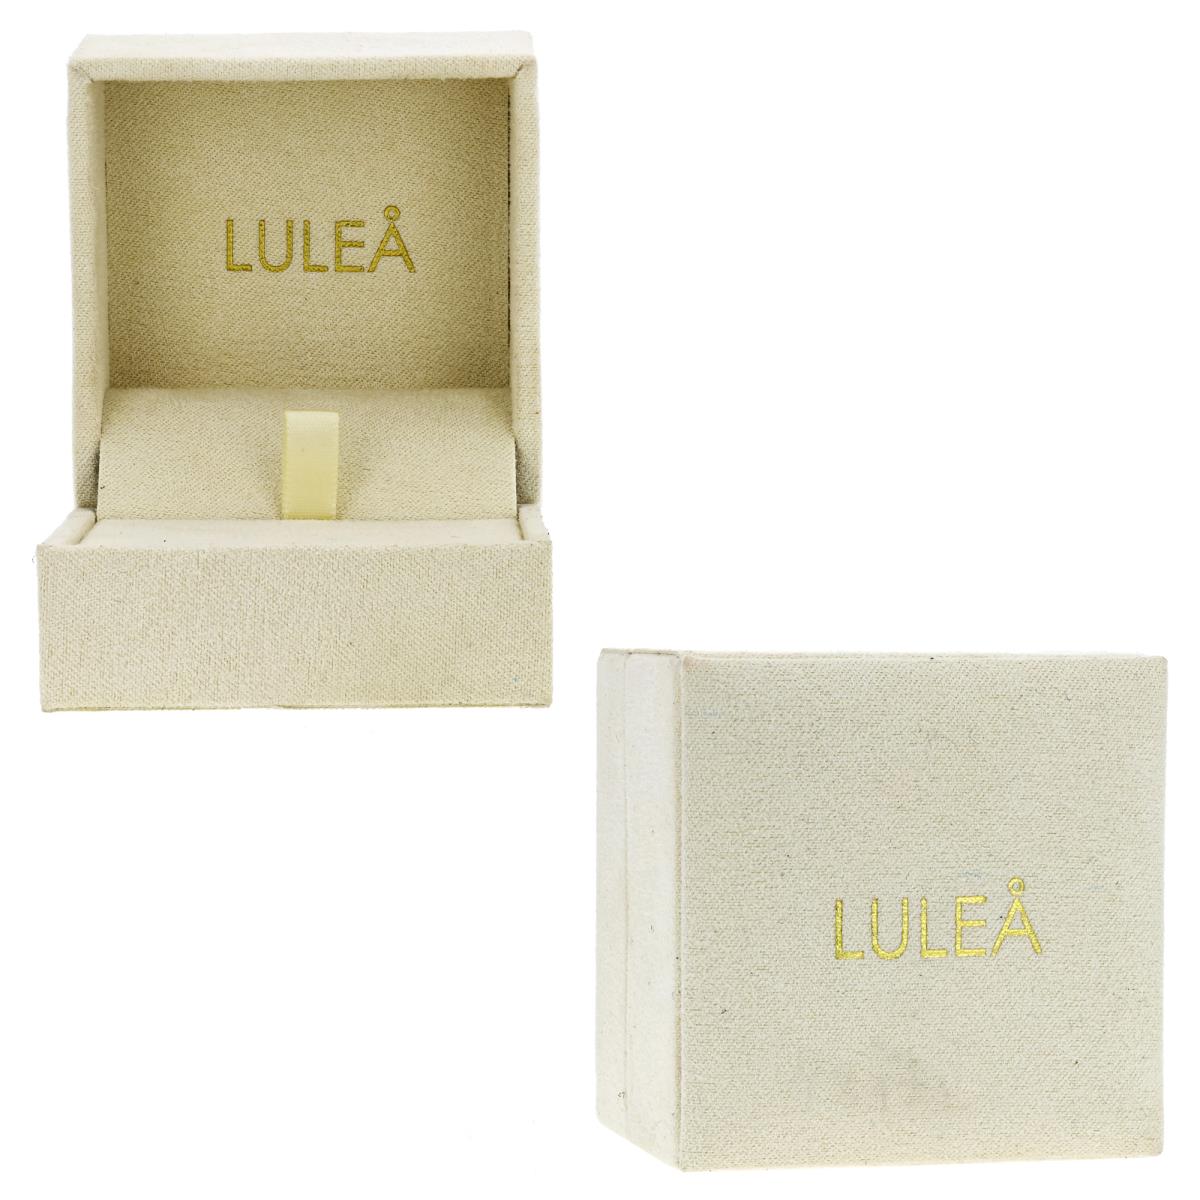 Lulea 60x60x45MM Ivory Suede Hinged Box